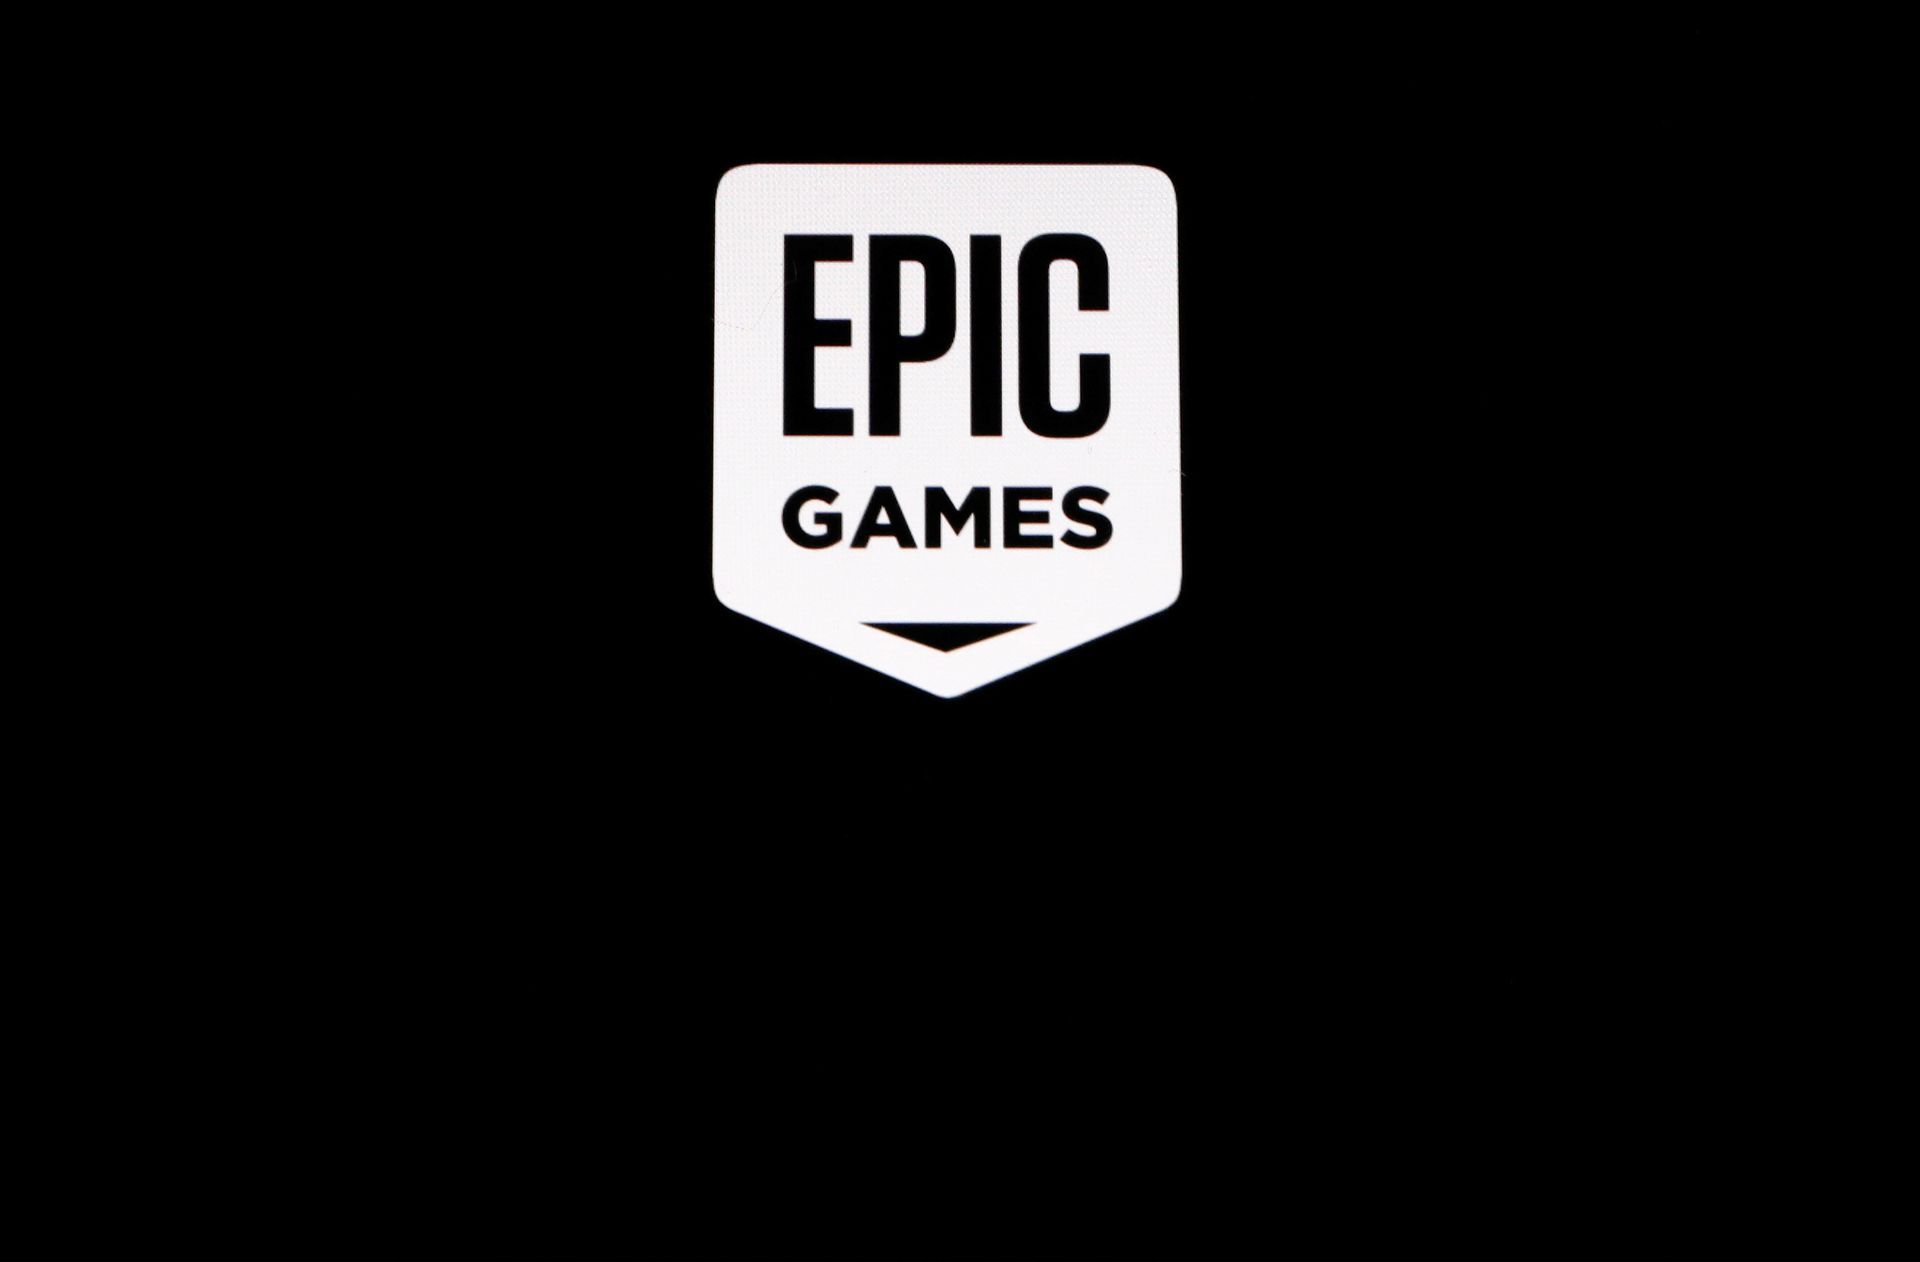 Epic Gamesの一時解雇で全従業員の16%との関係が切断される